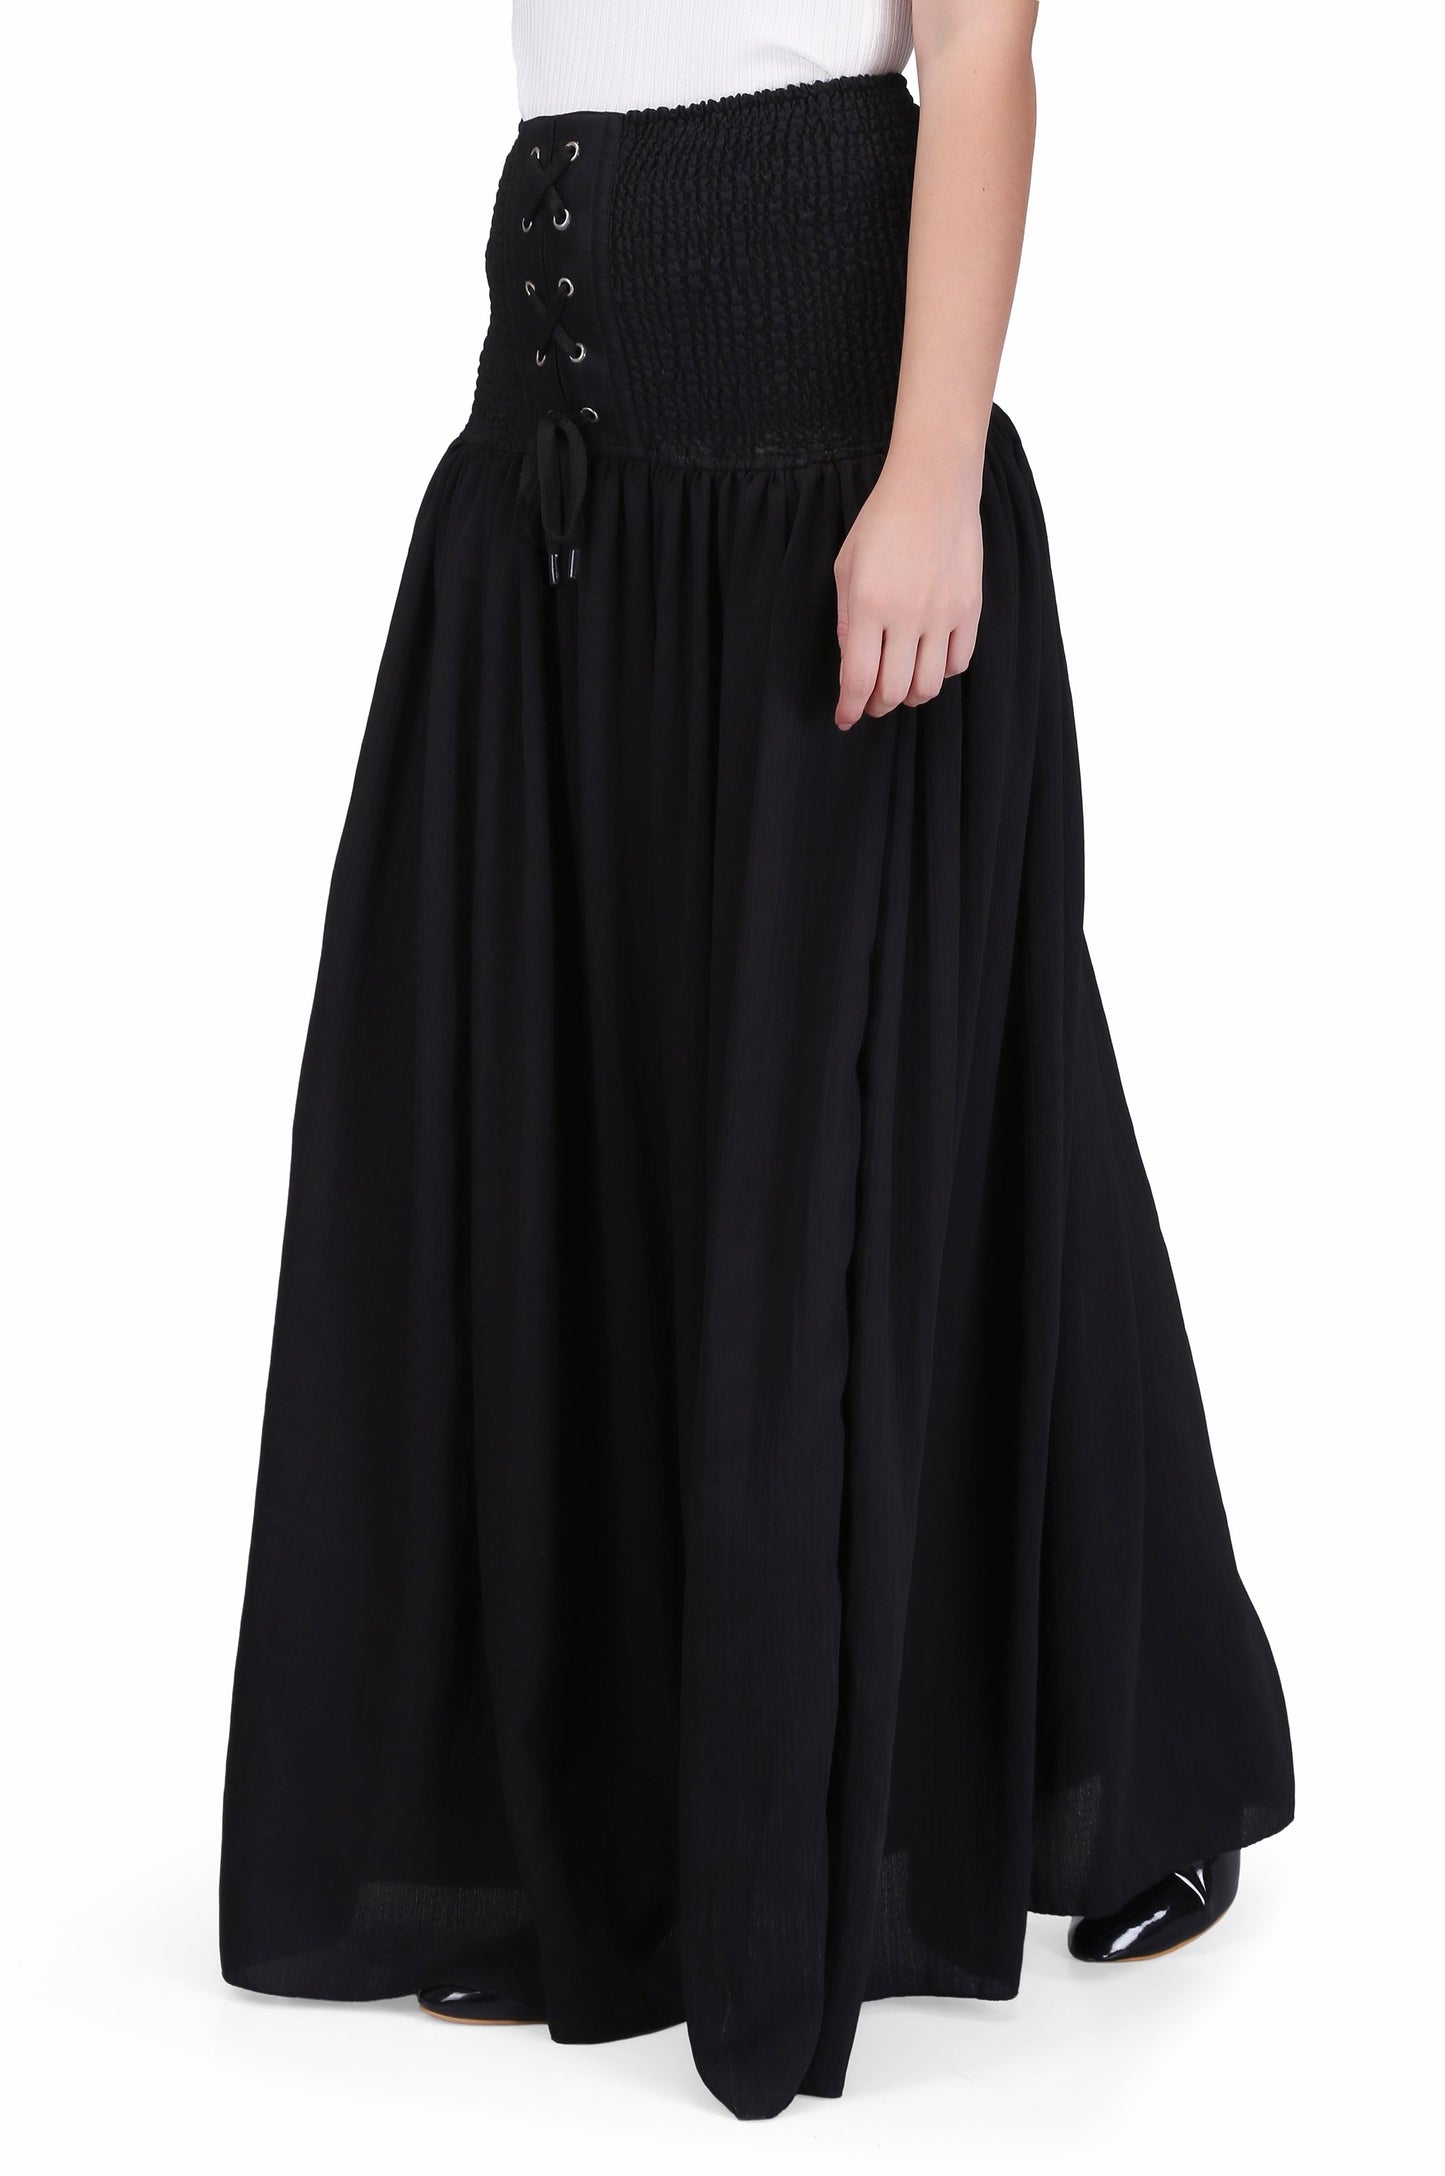 black chiffon long skirt - Corset Revolution